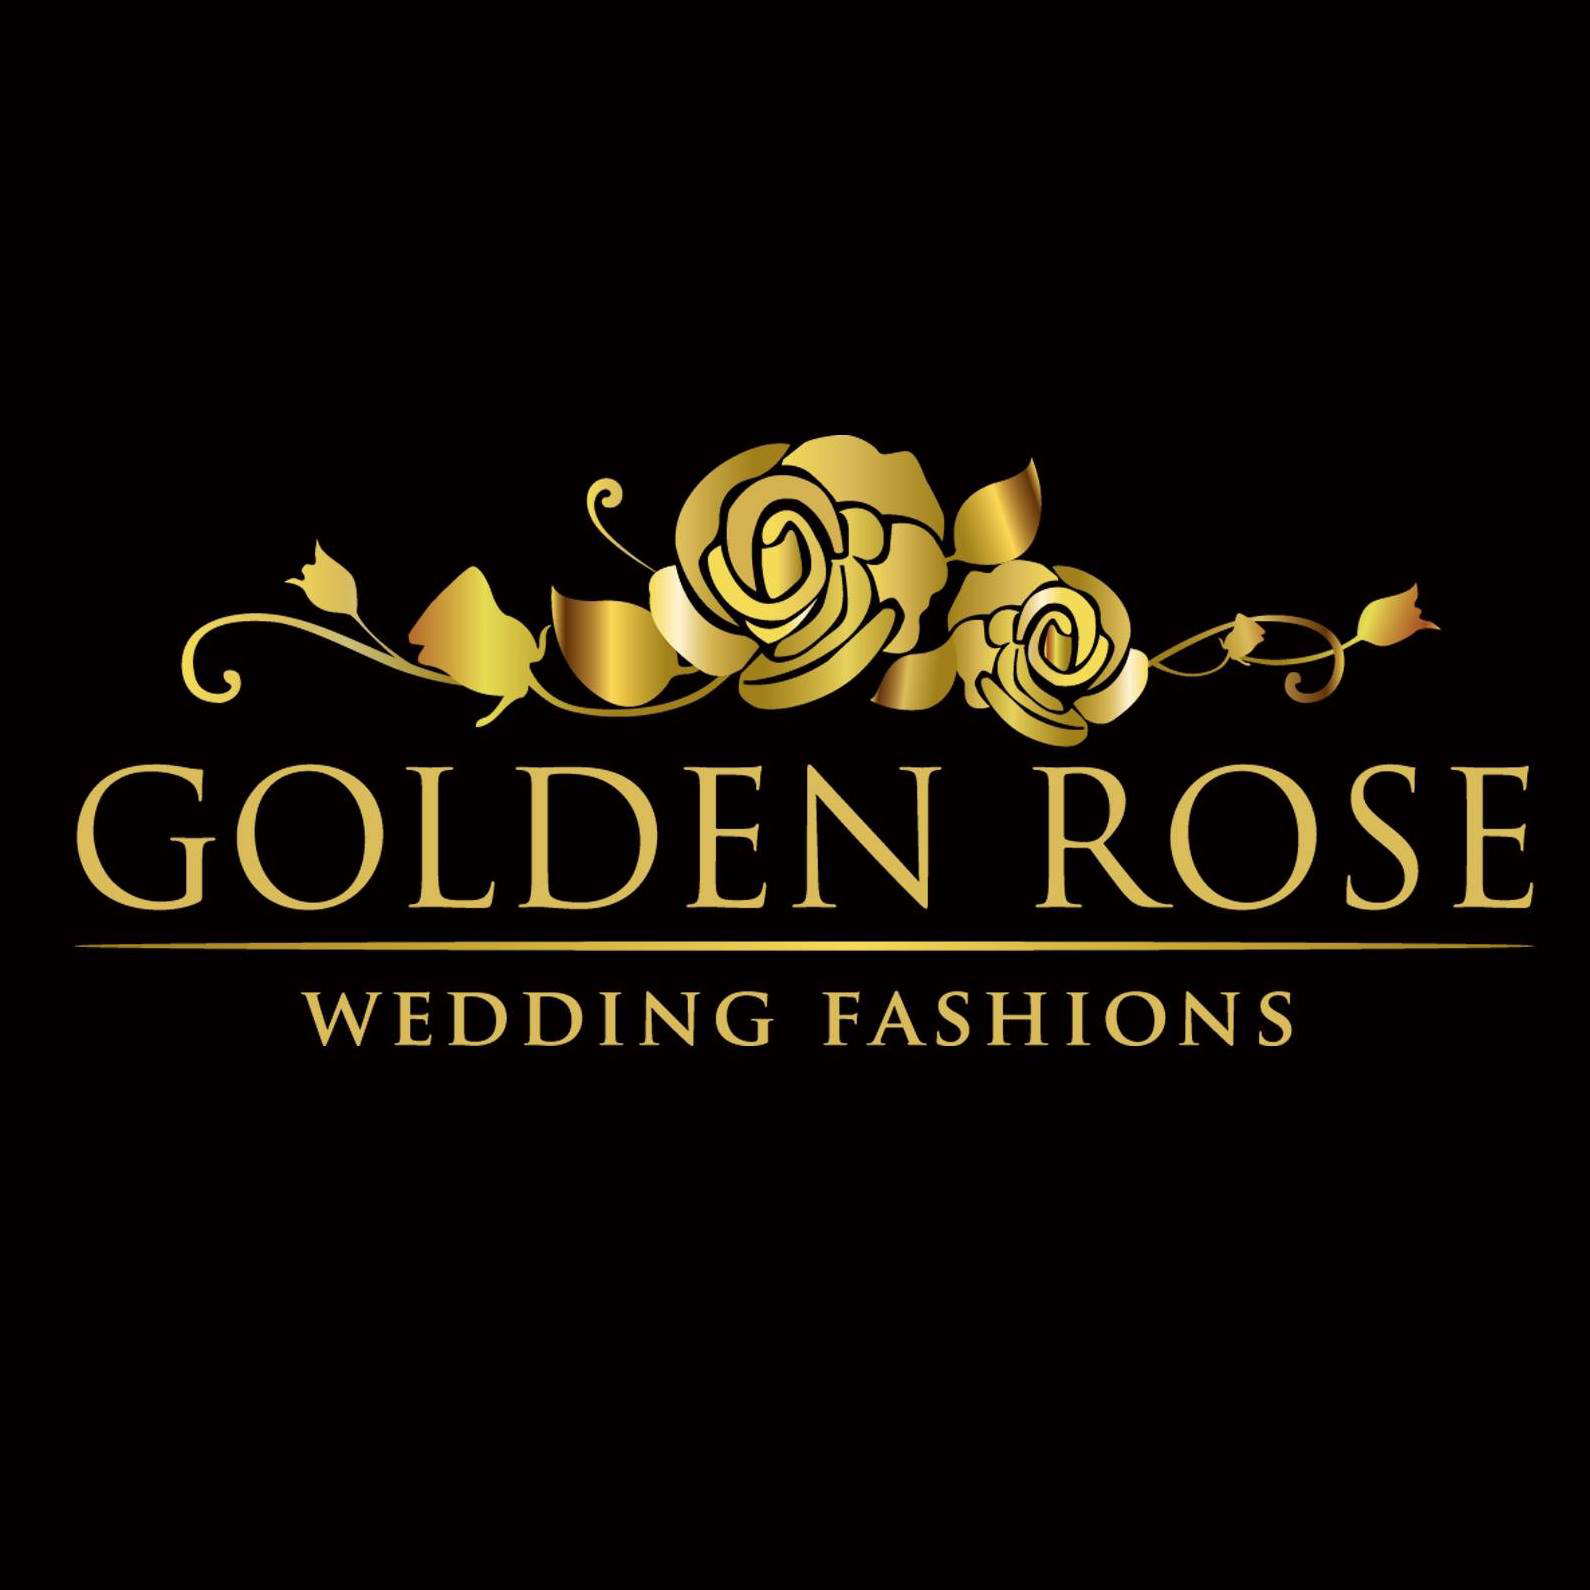 Golden Rose Wedding Fashions